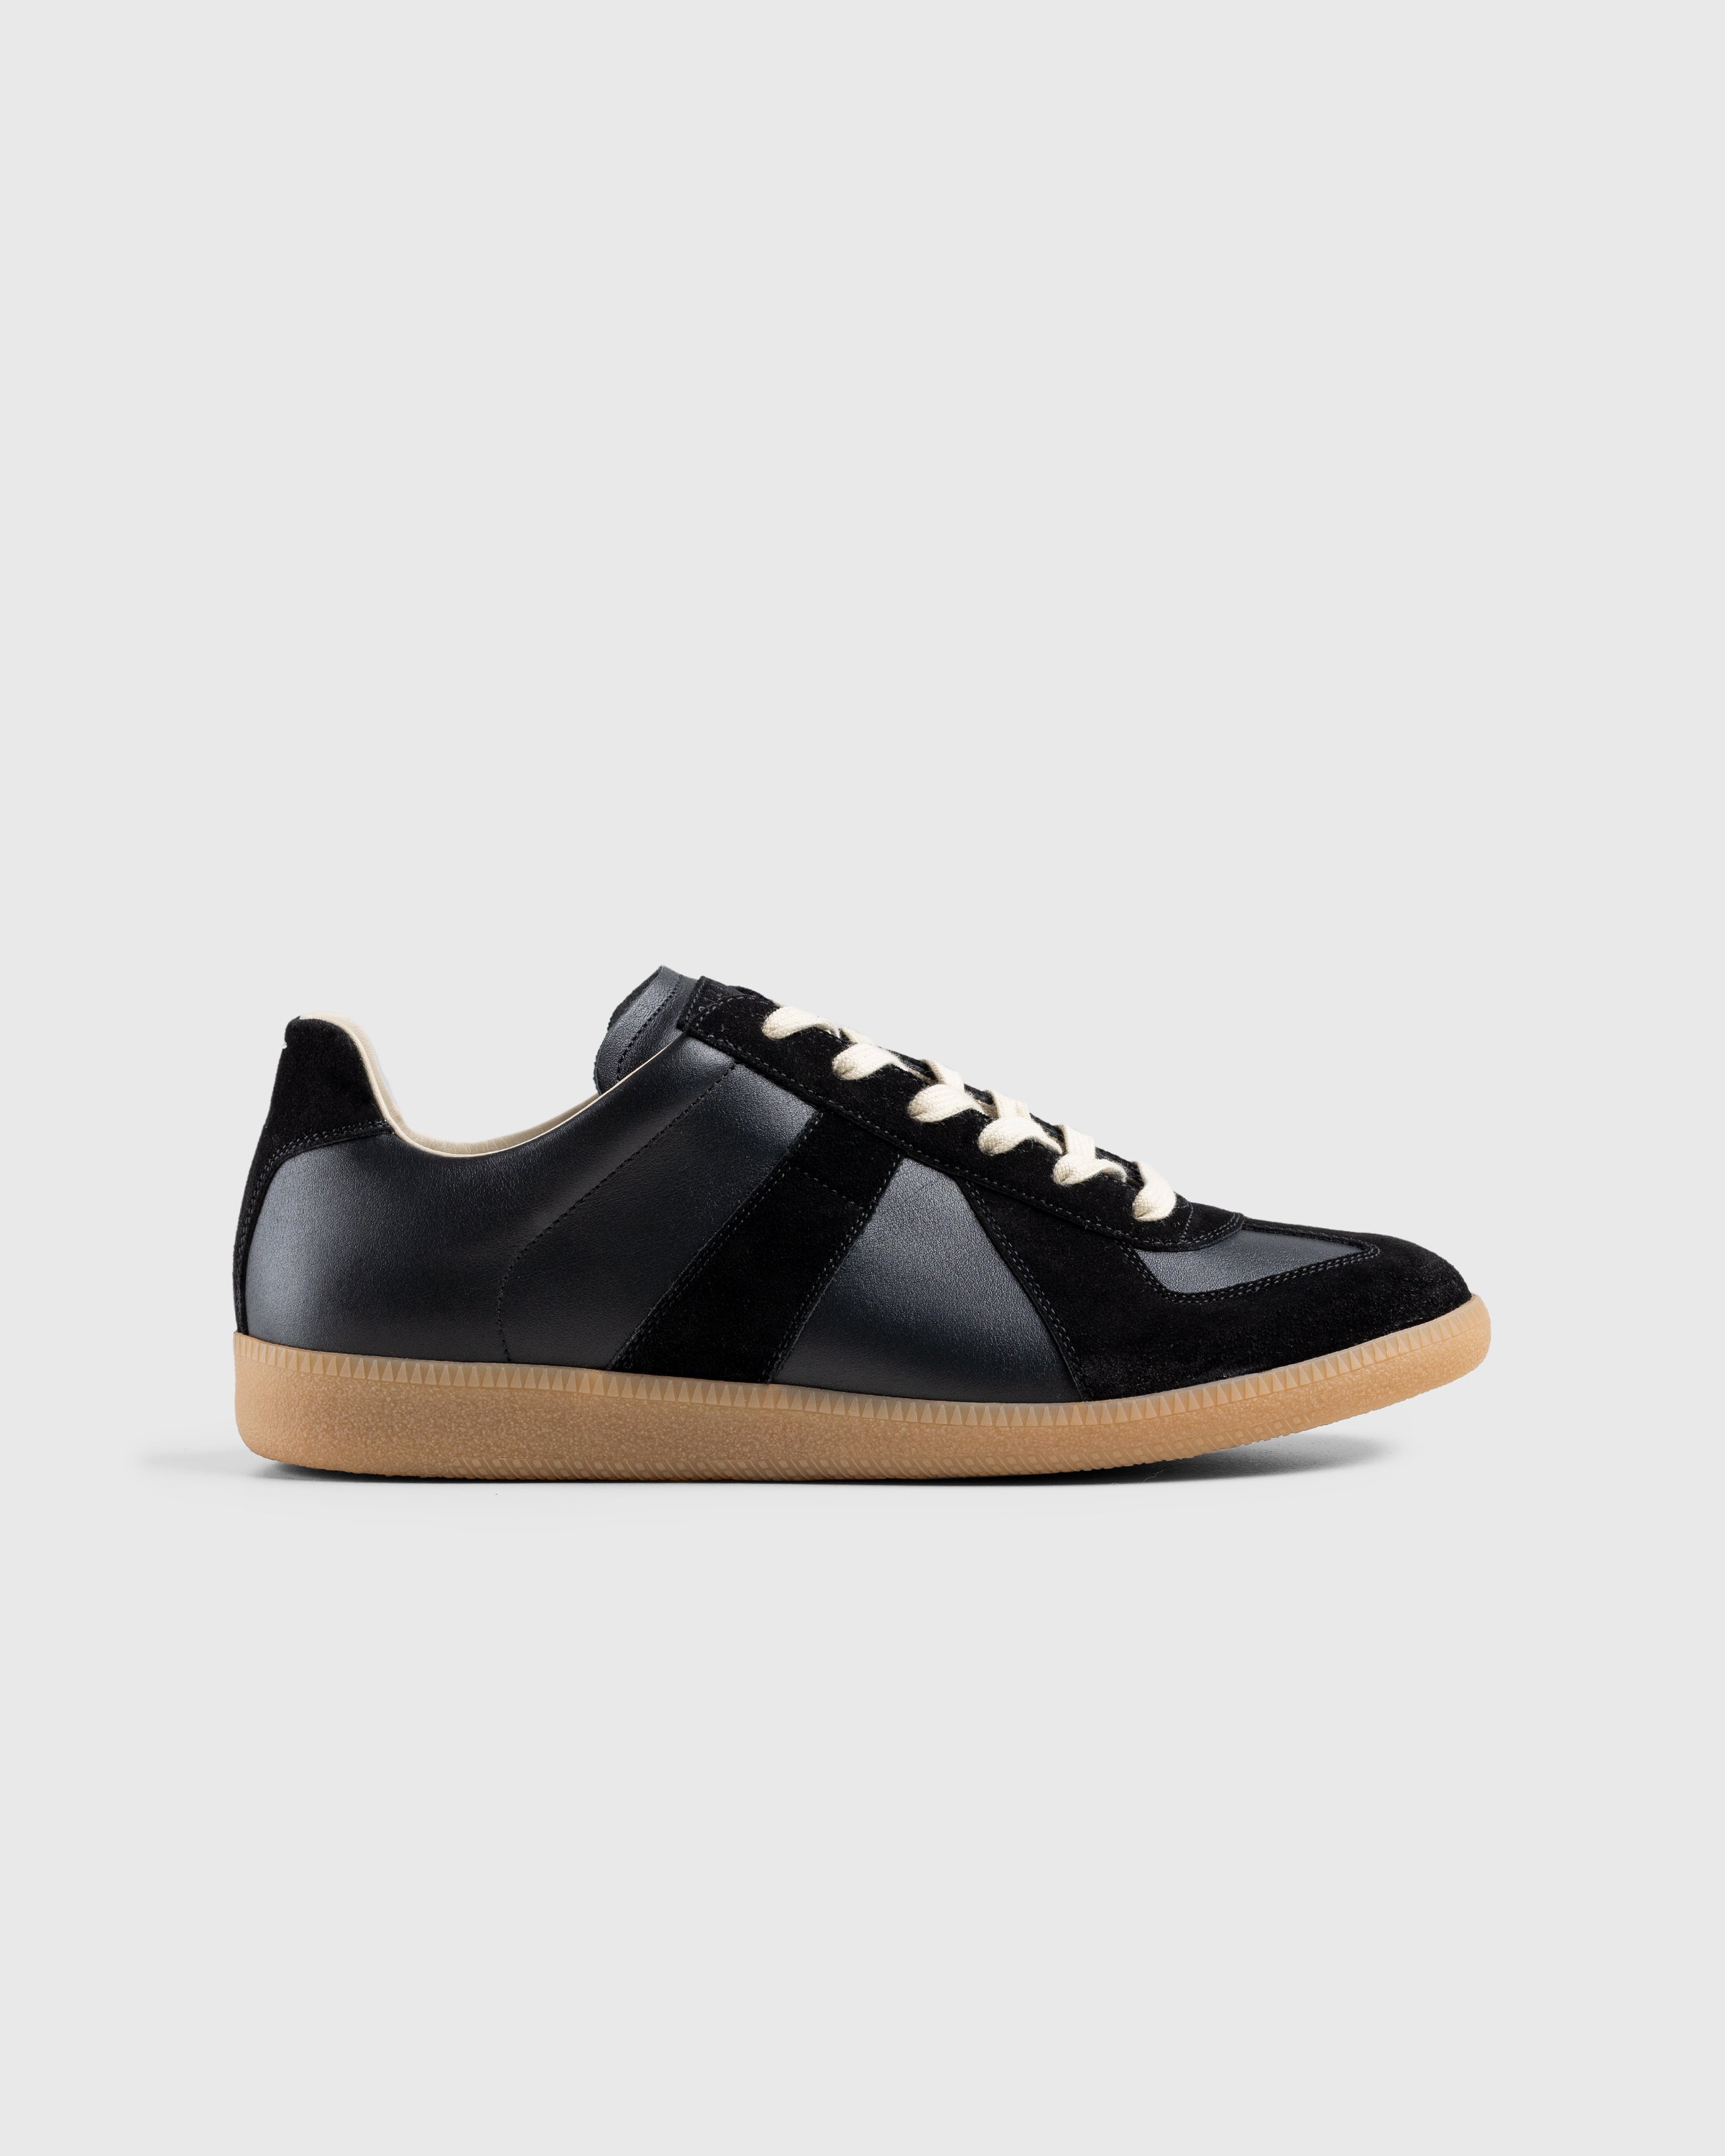 Maison Margiela - Leather Replica Sneakers Black - Footwear - Black - Image 1